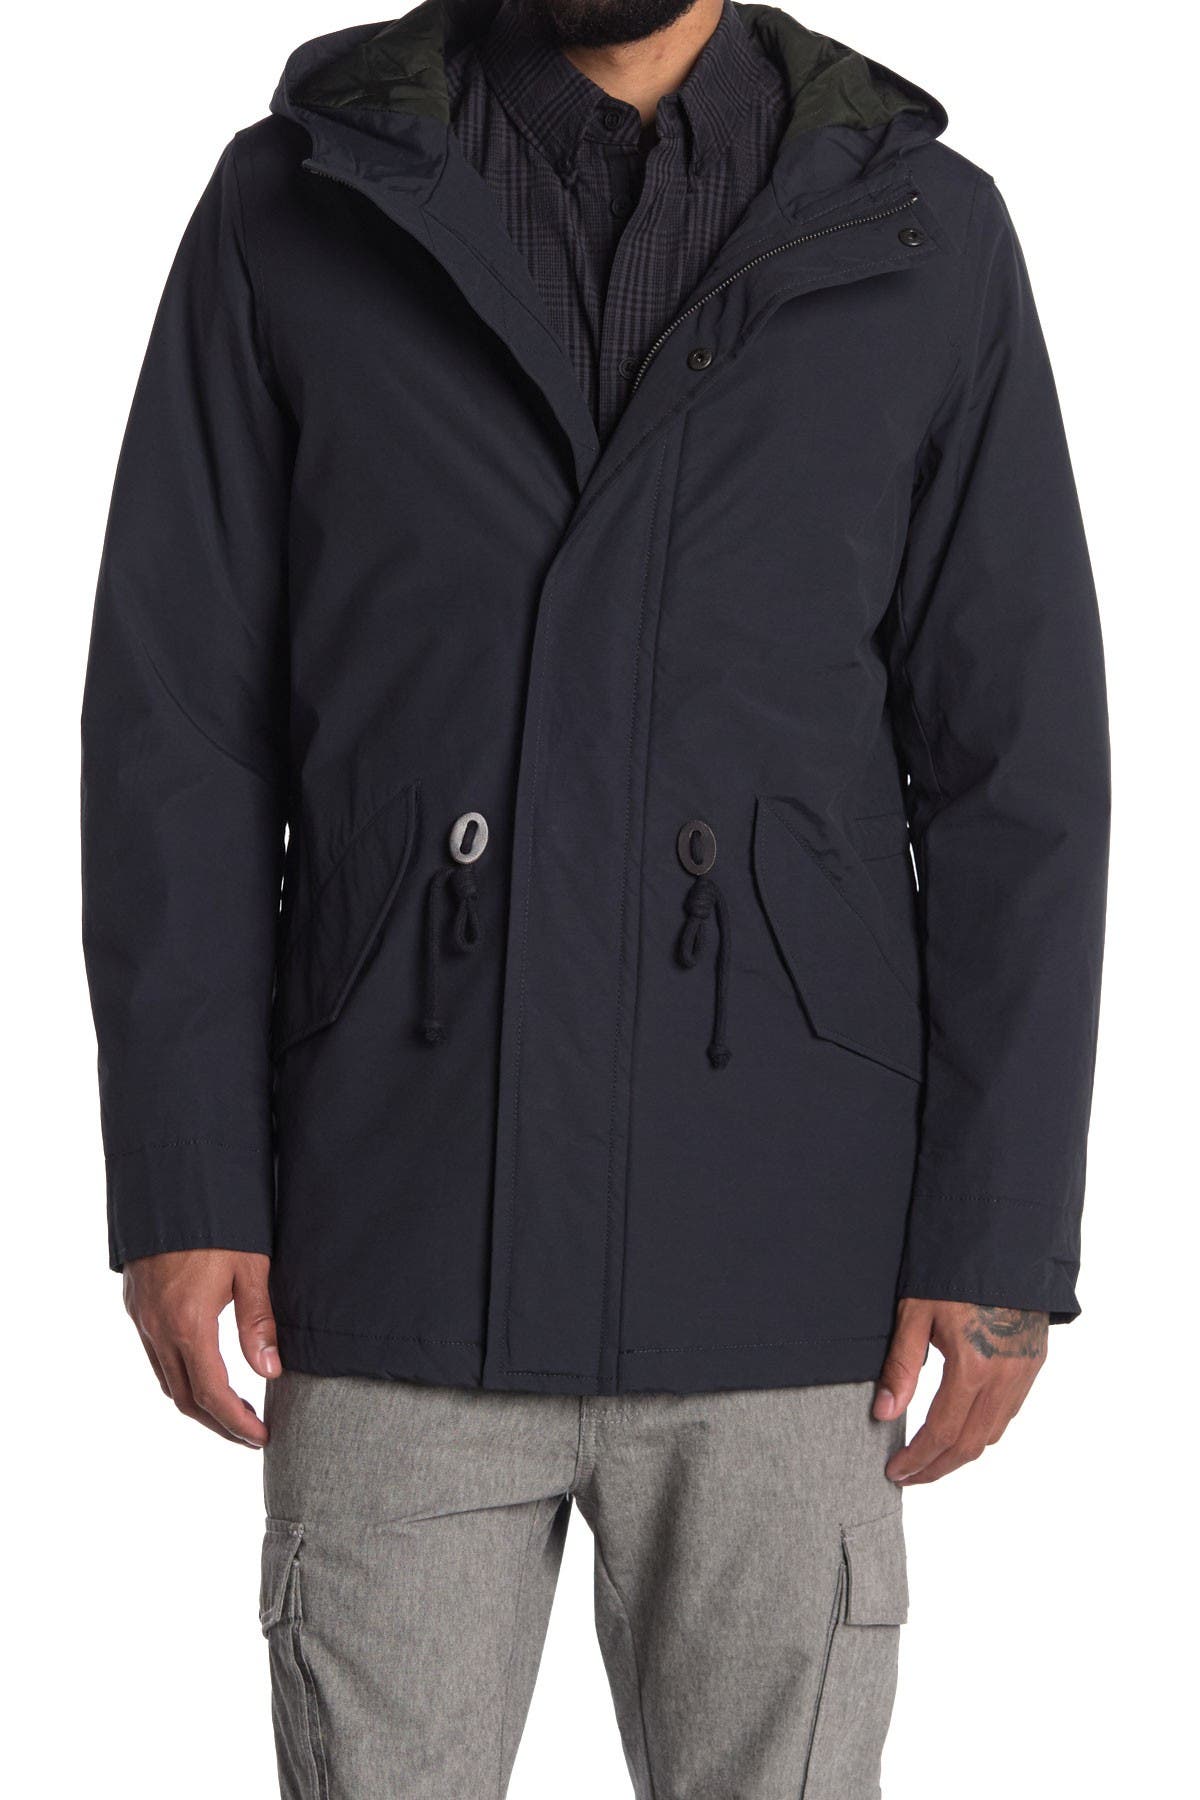 levis lined fishtail parka jacket